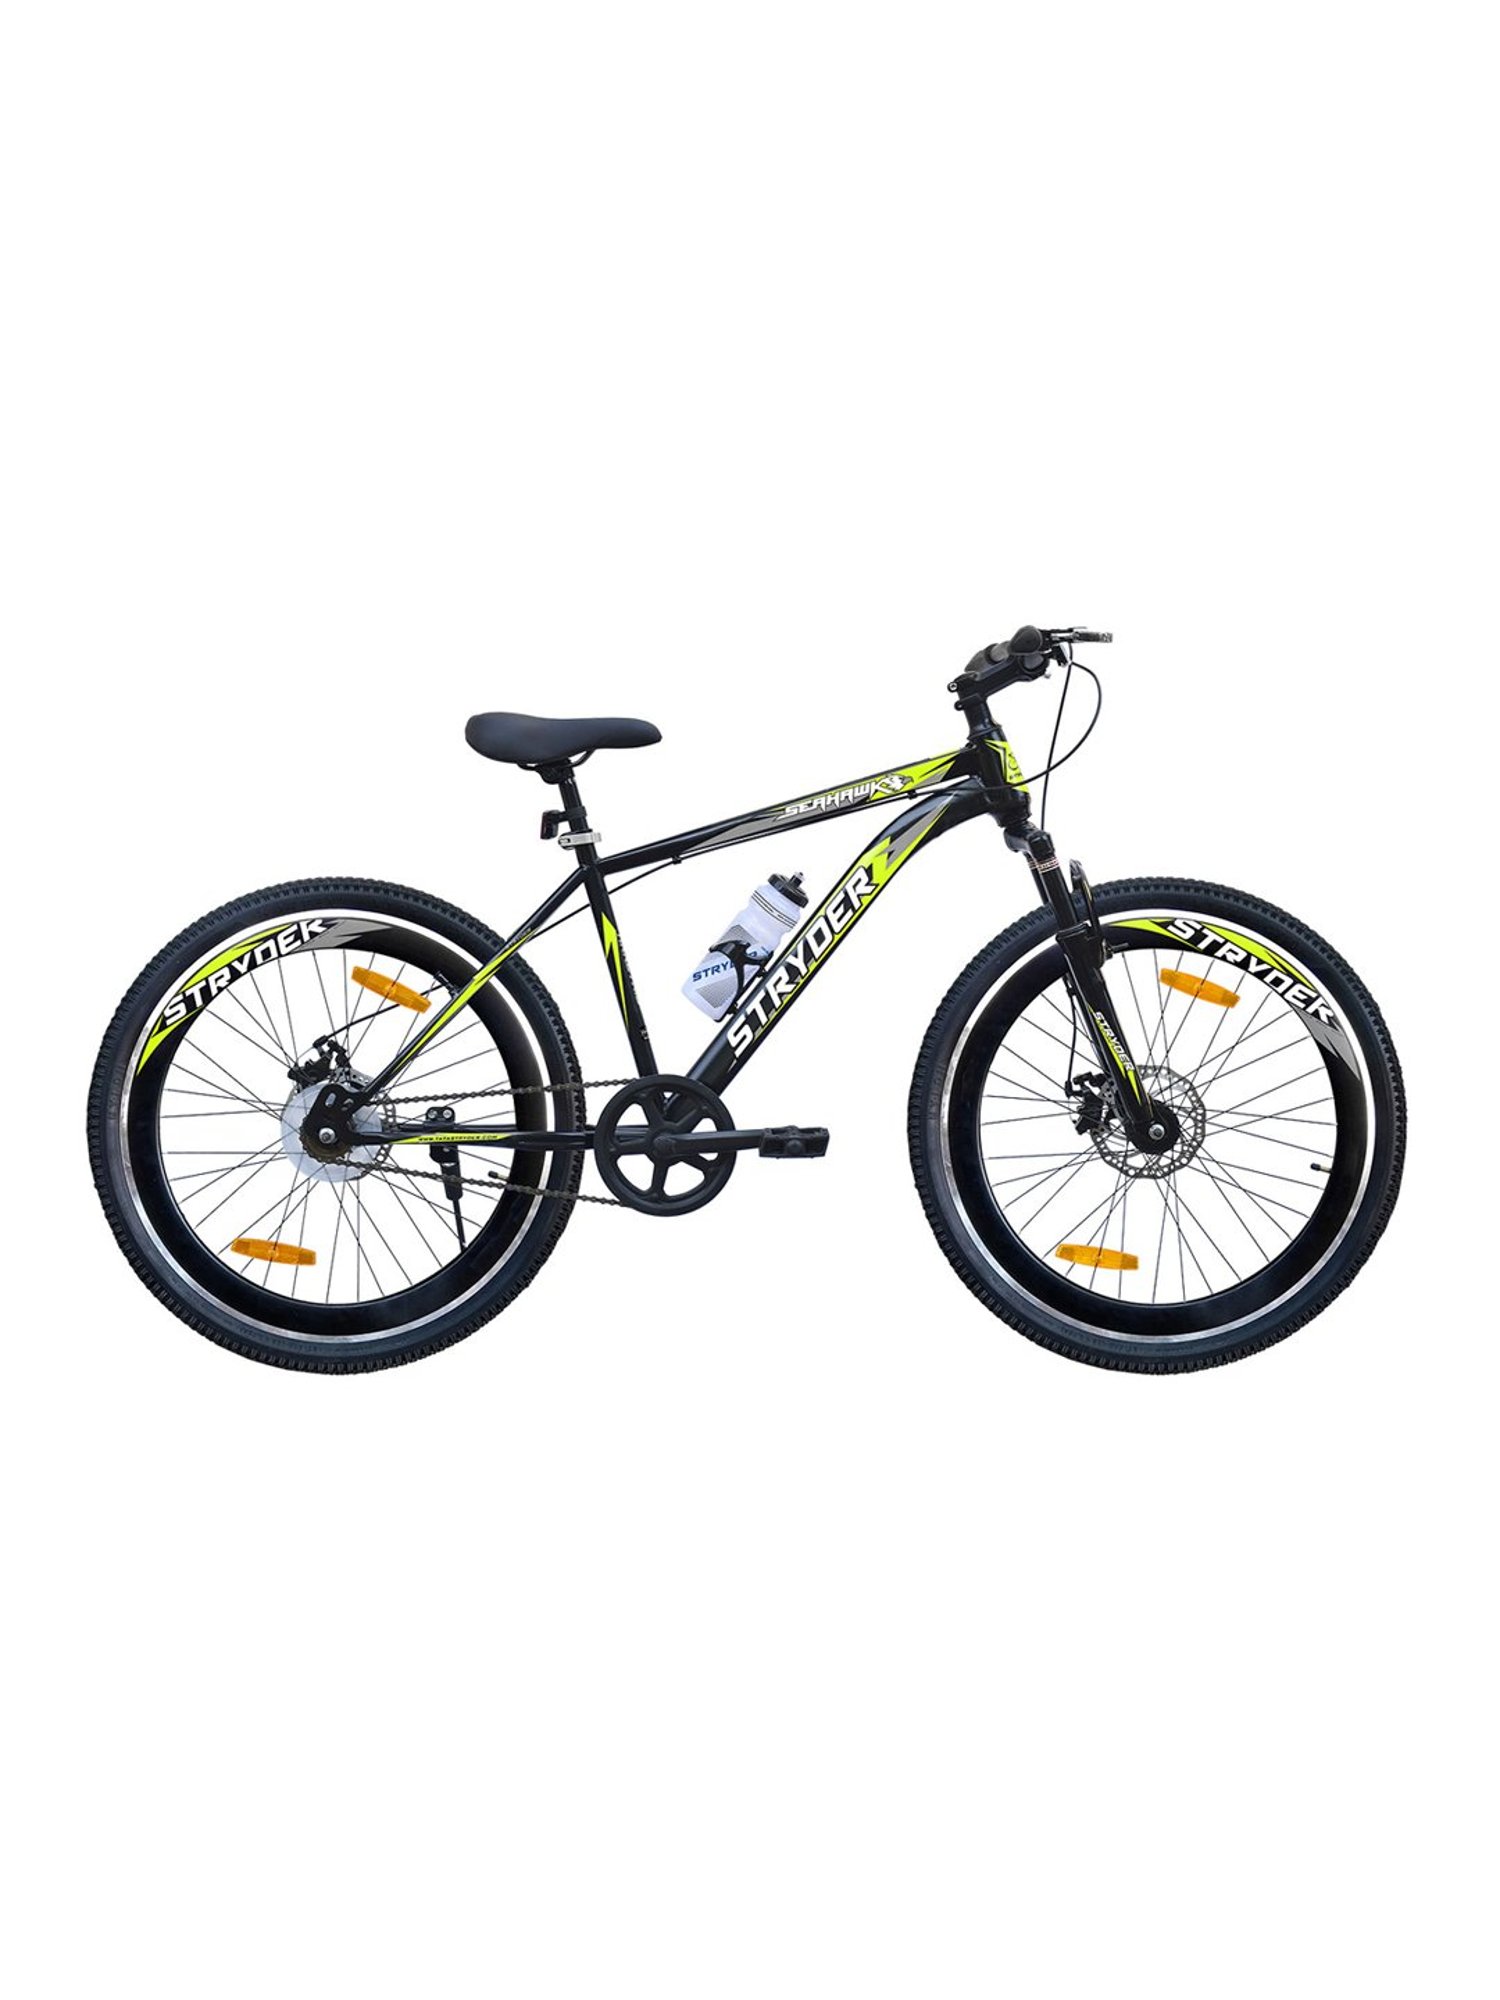 tata cycle brand